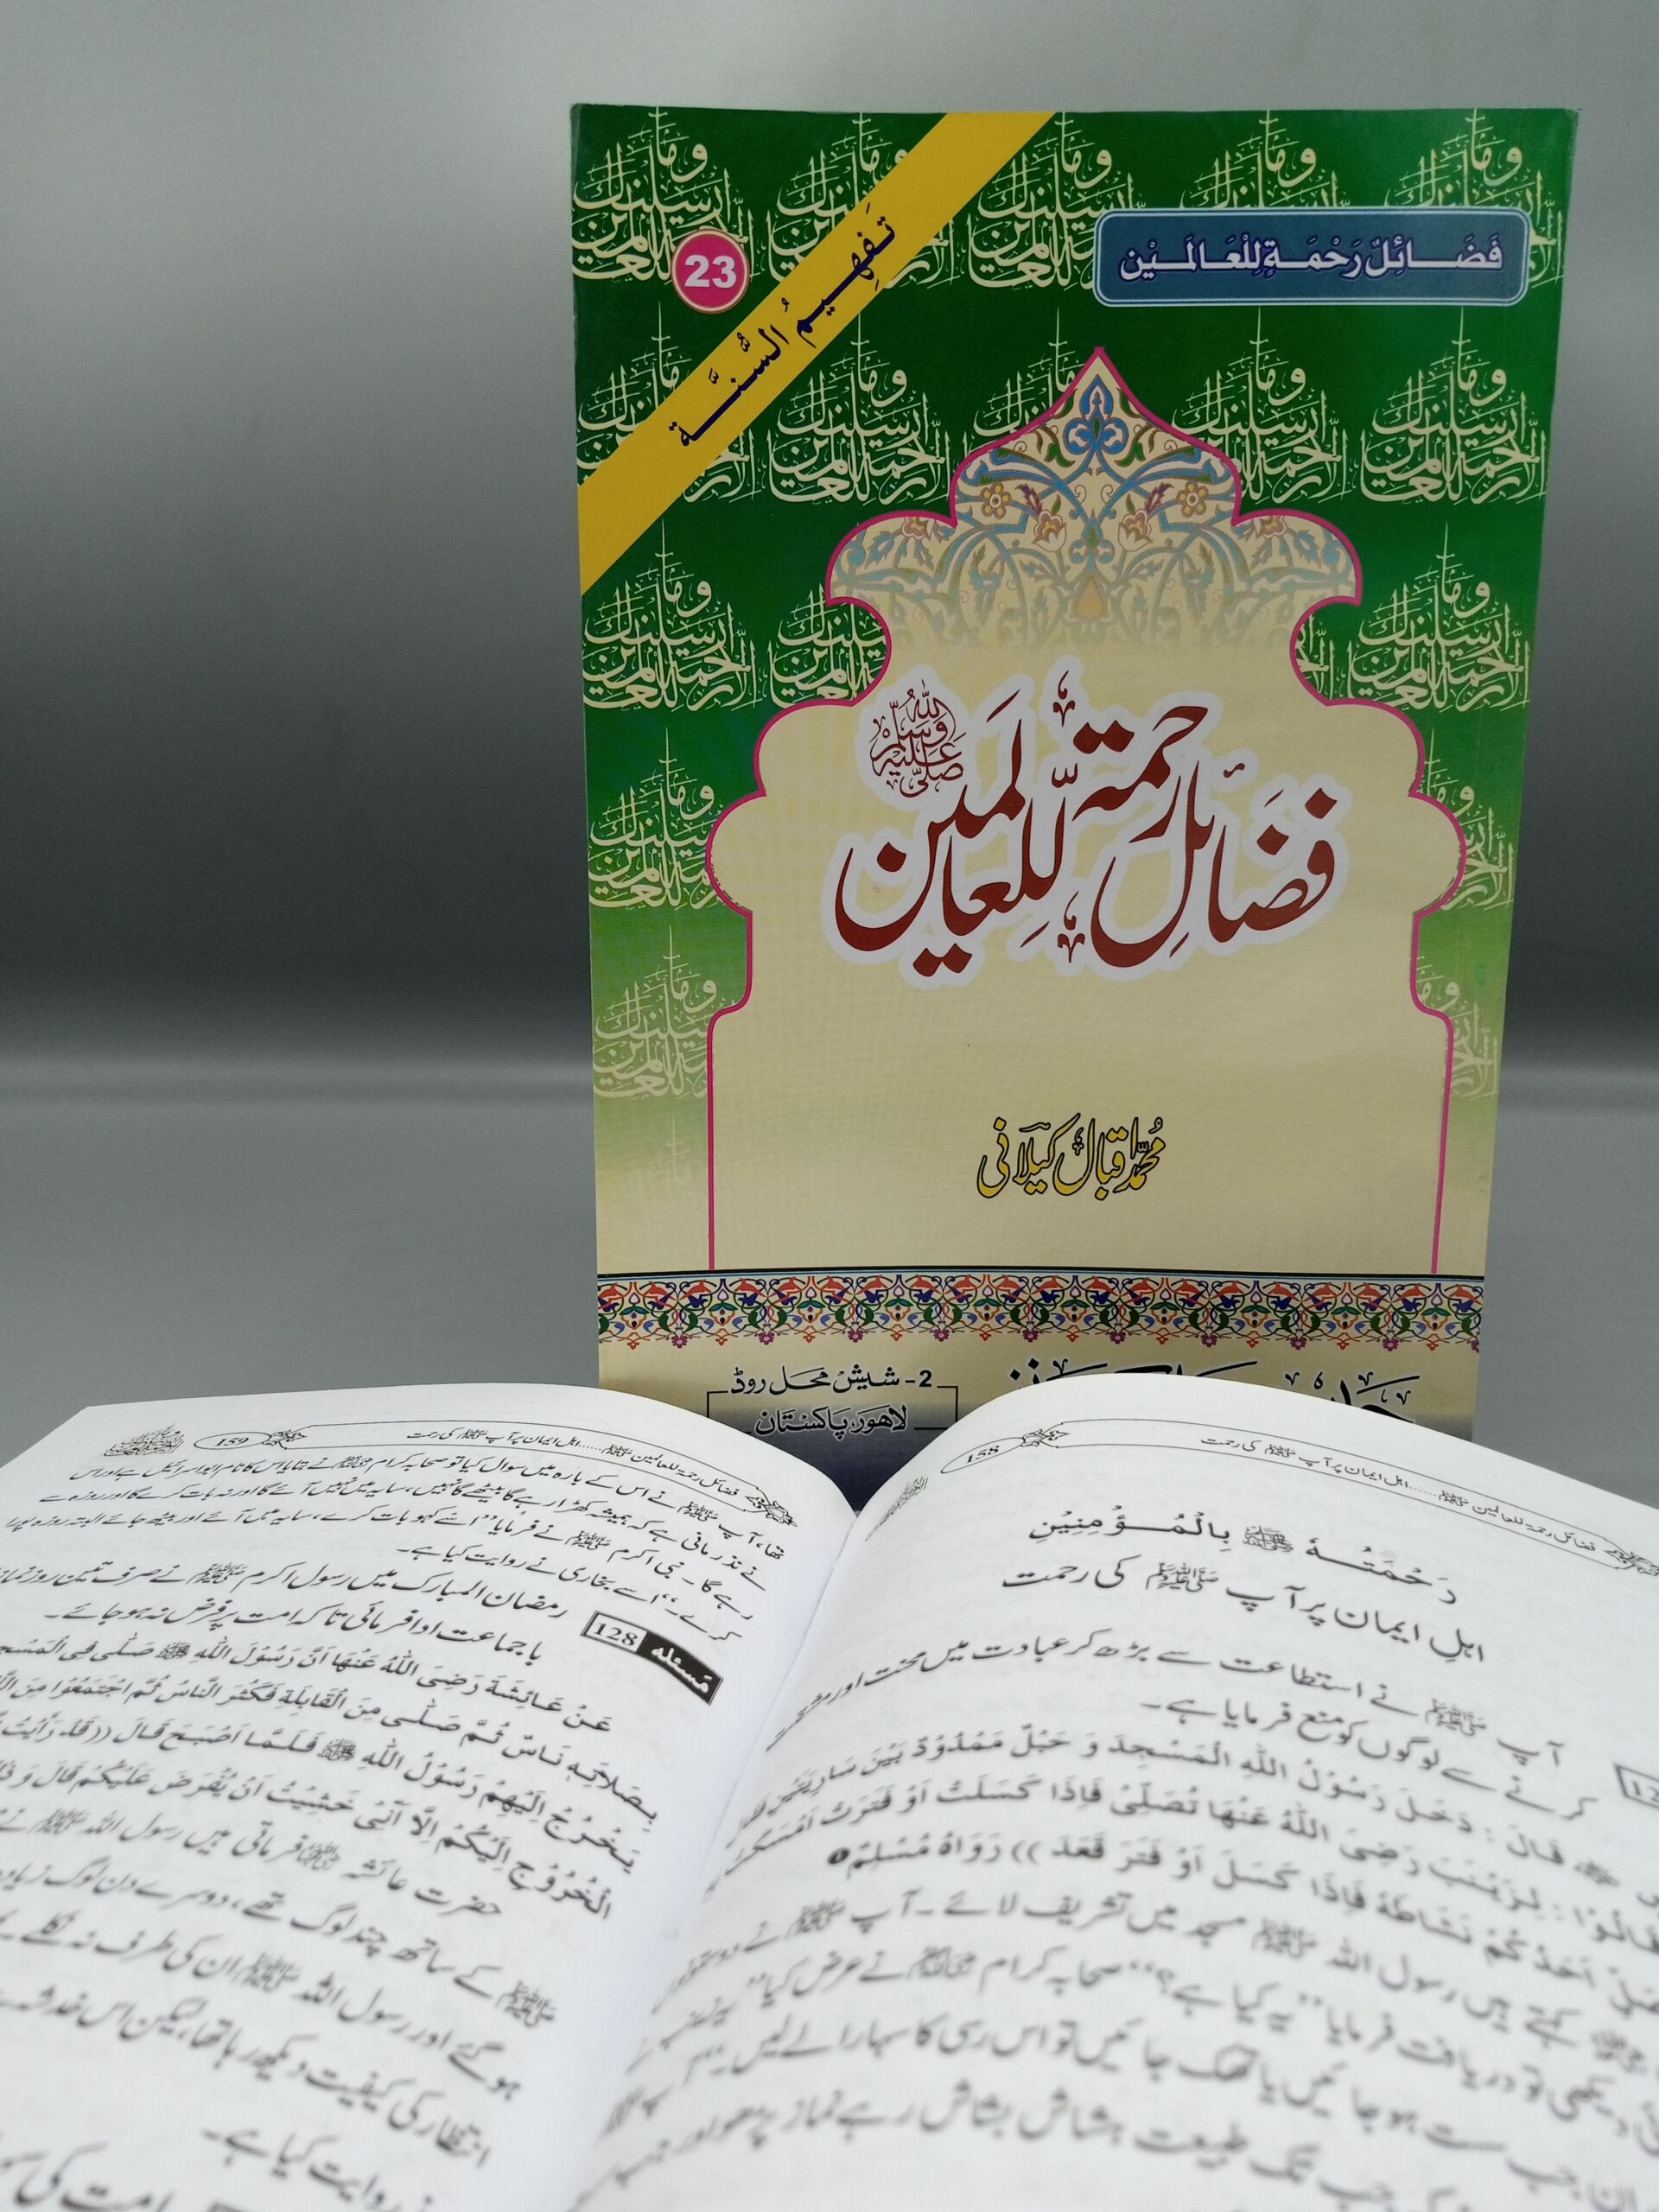 rahmatul lil alameen essay in urdu with headings